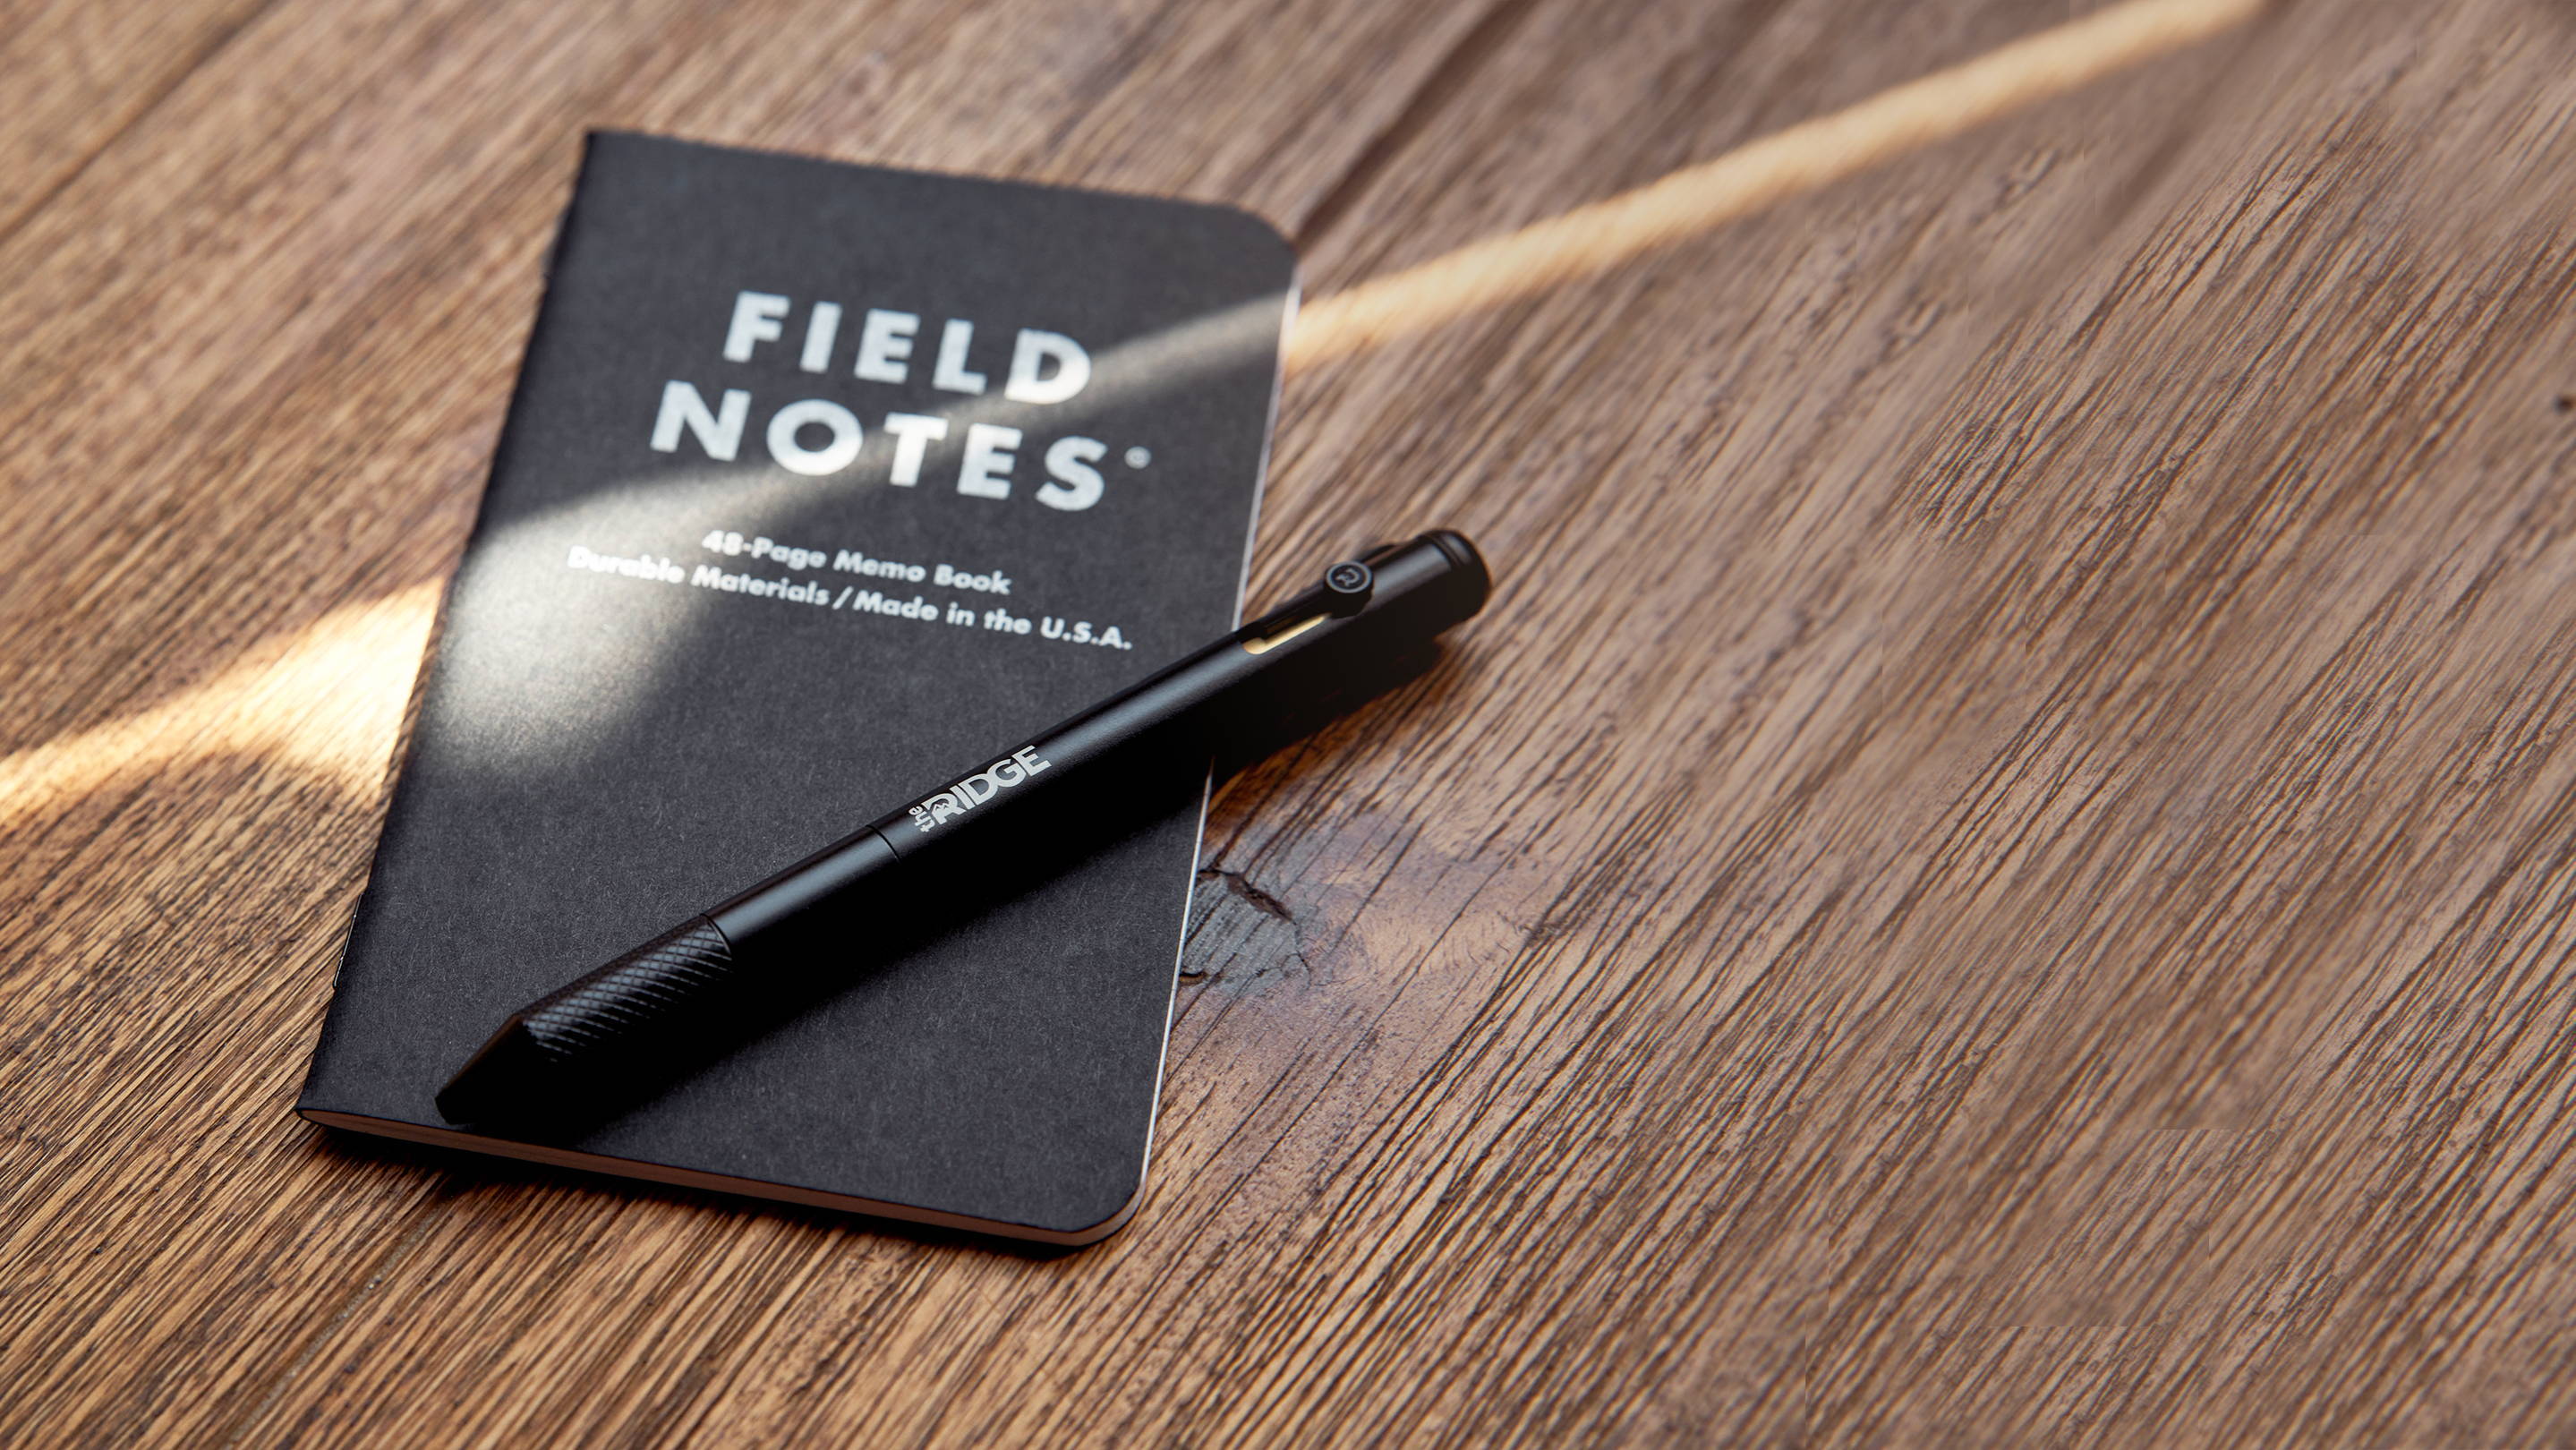 Matte Black Titanium Bolt Action Pen and Ridge Field Notes on wooden top